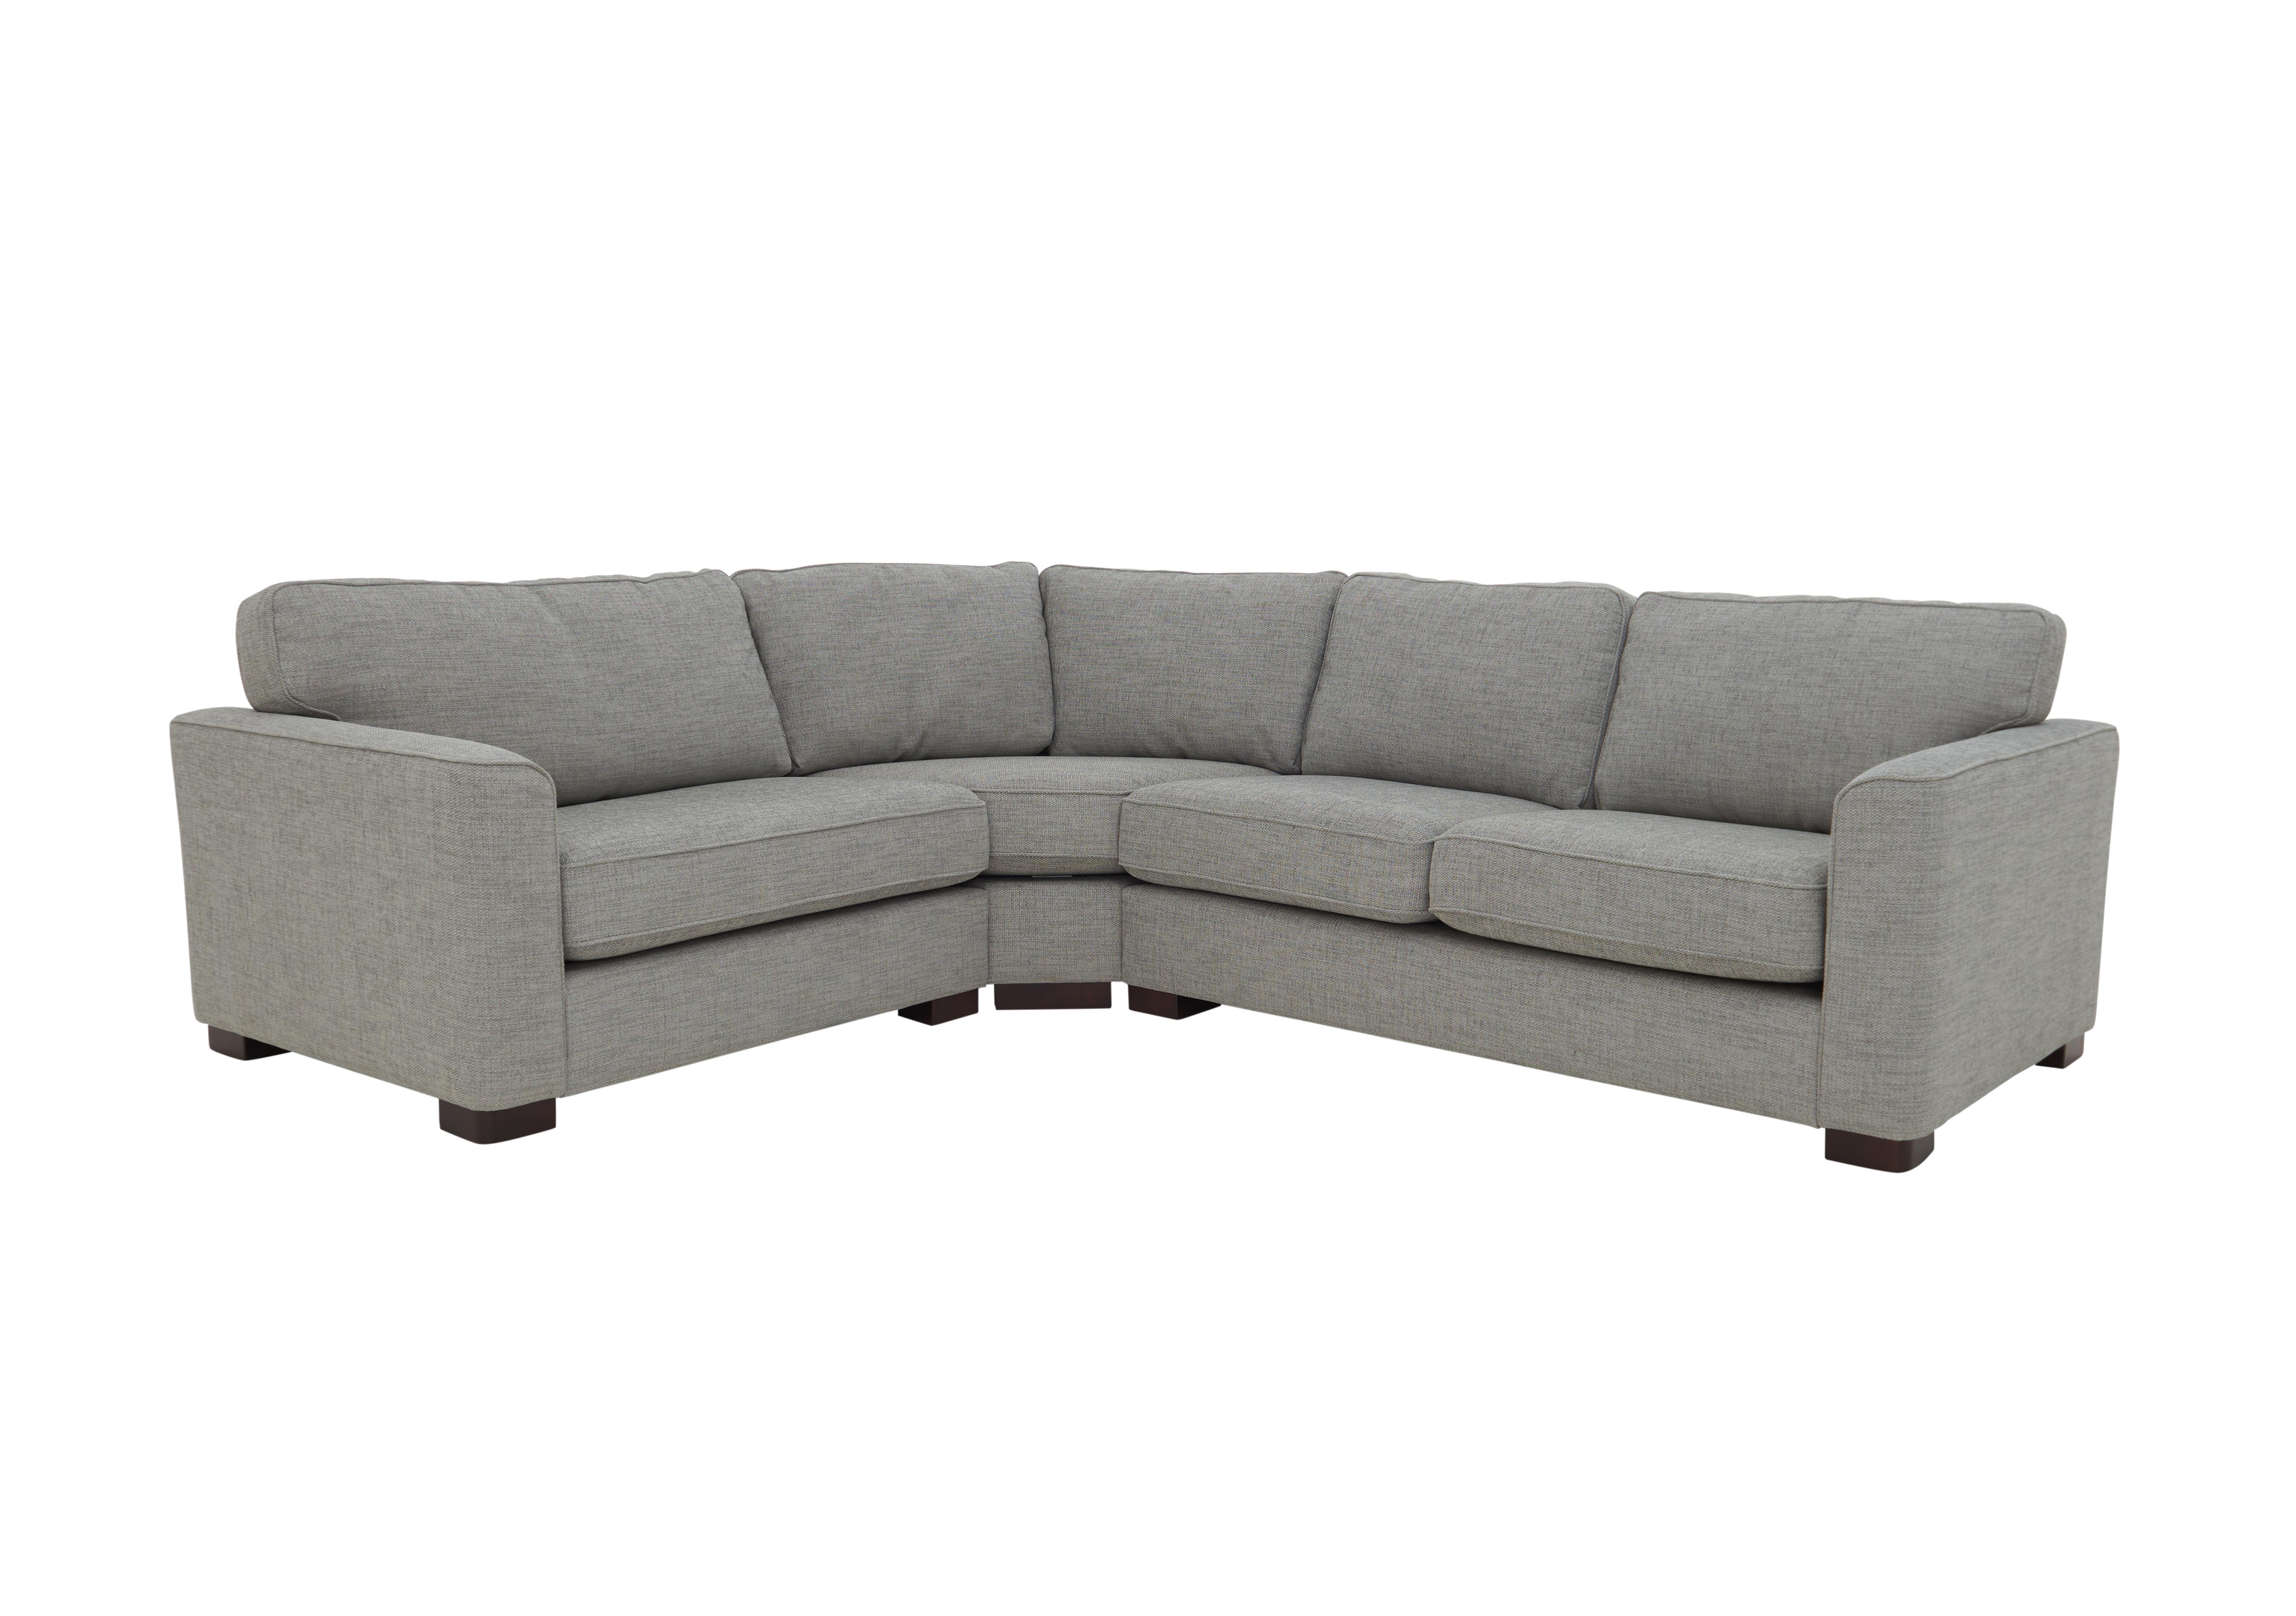 Elora Fabric Corner Sofa in Kento 301 Warm Grey Dbf on Furniture Village